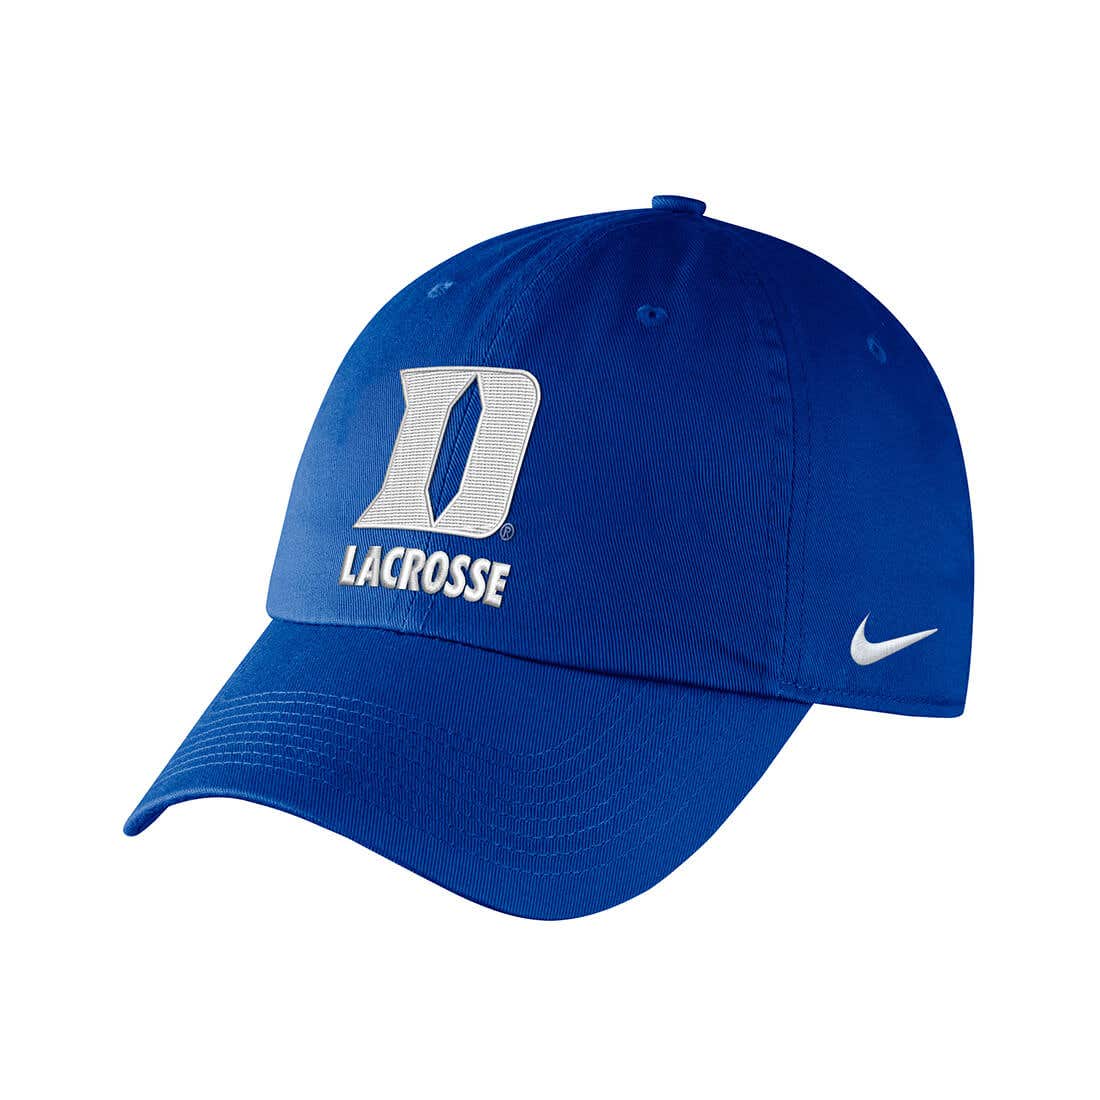 Duke Nike Campus Hat 2019 | Lacrosse Unlimited